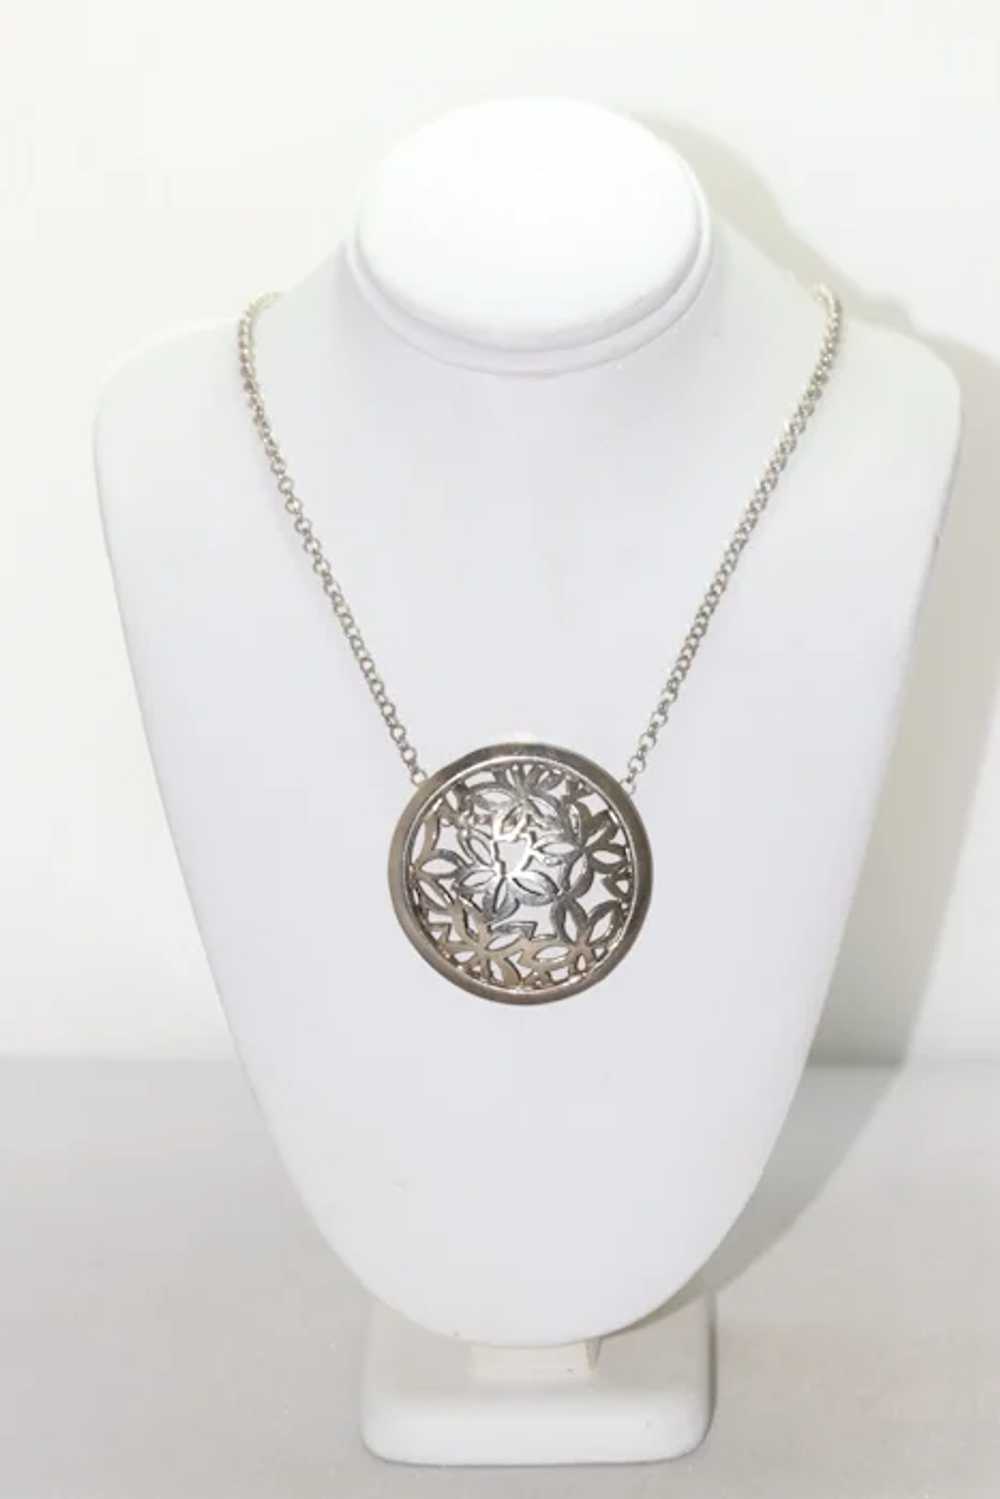 Vintage Sterling Silver Flowers Necklace - image 2